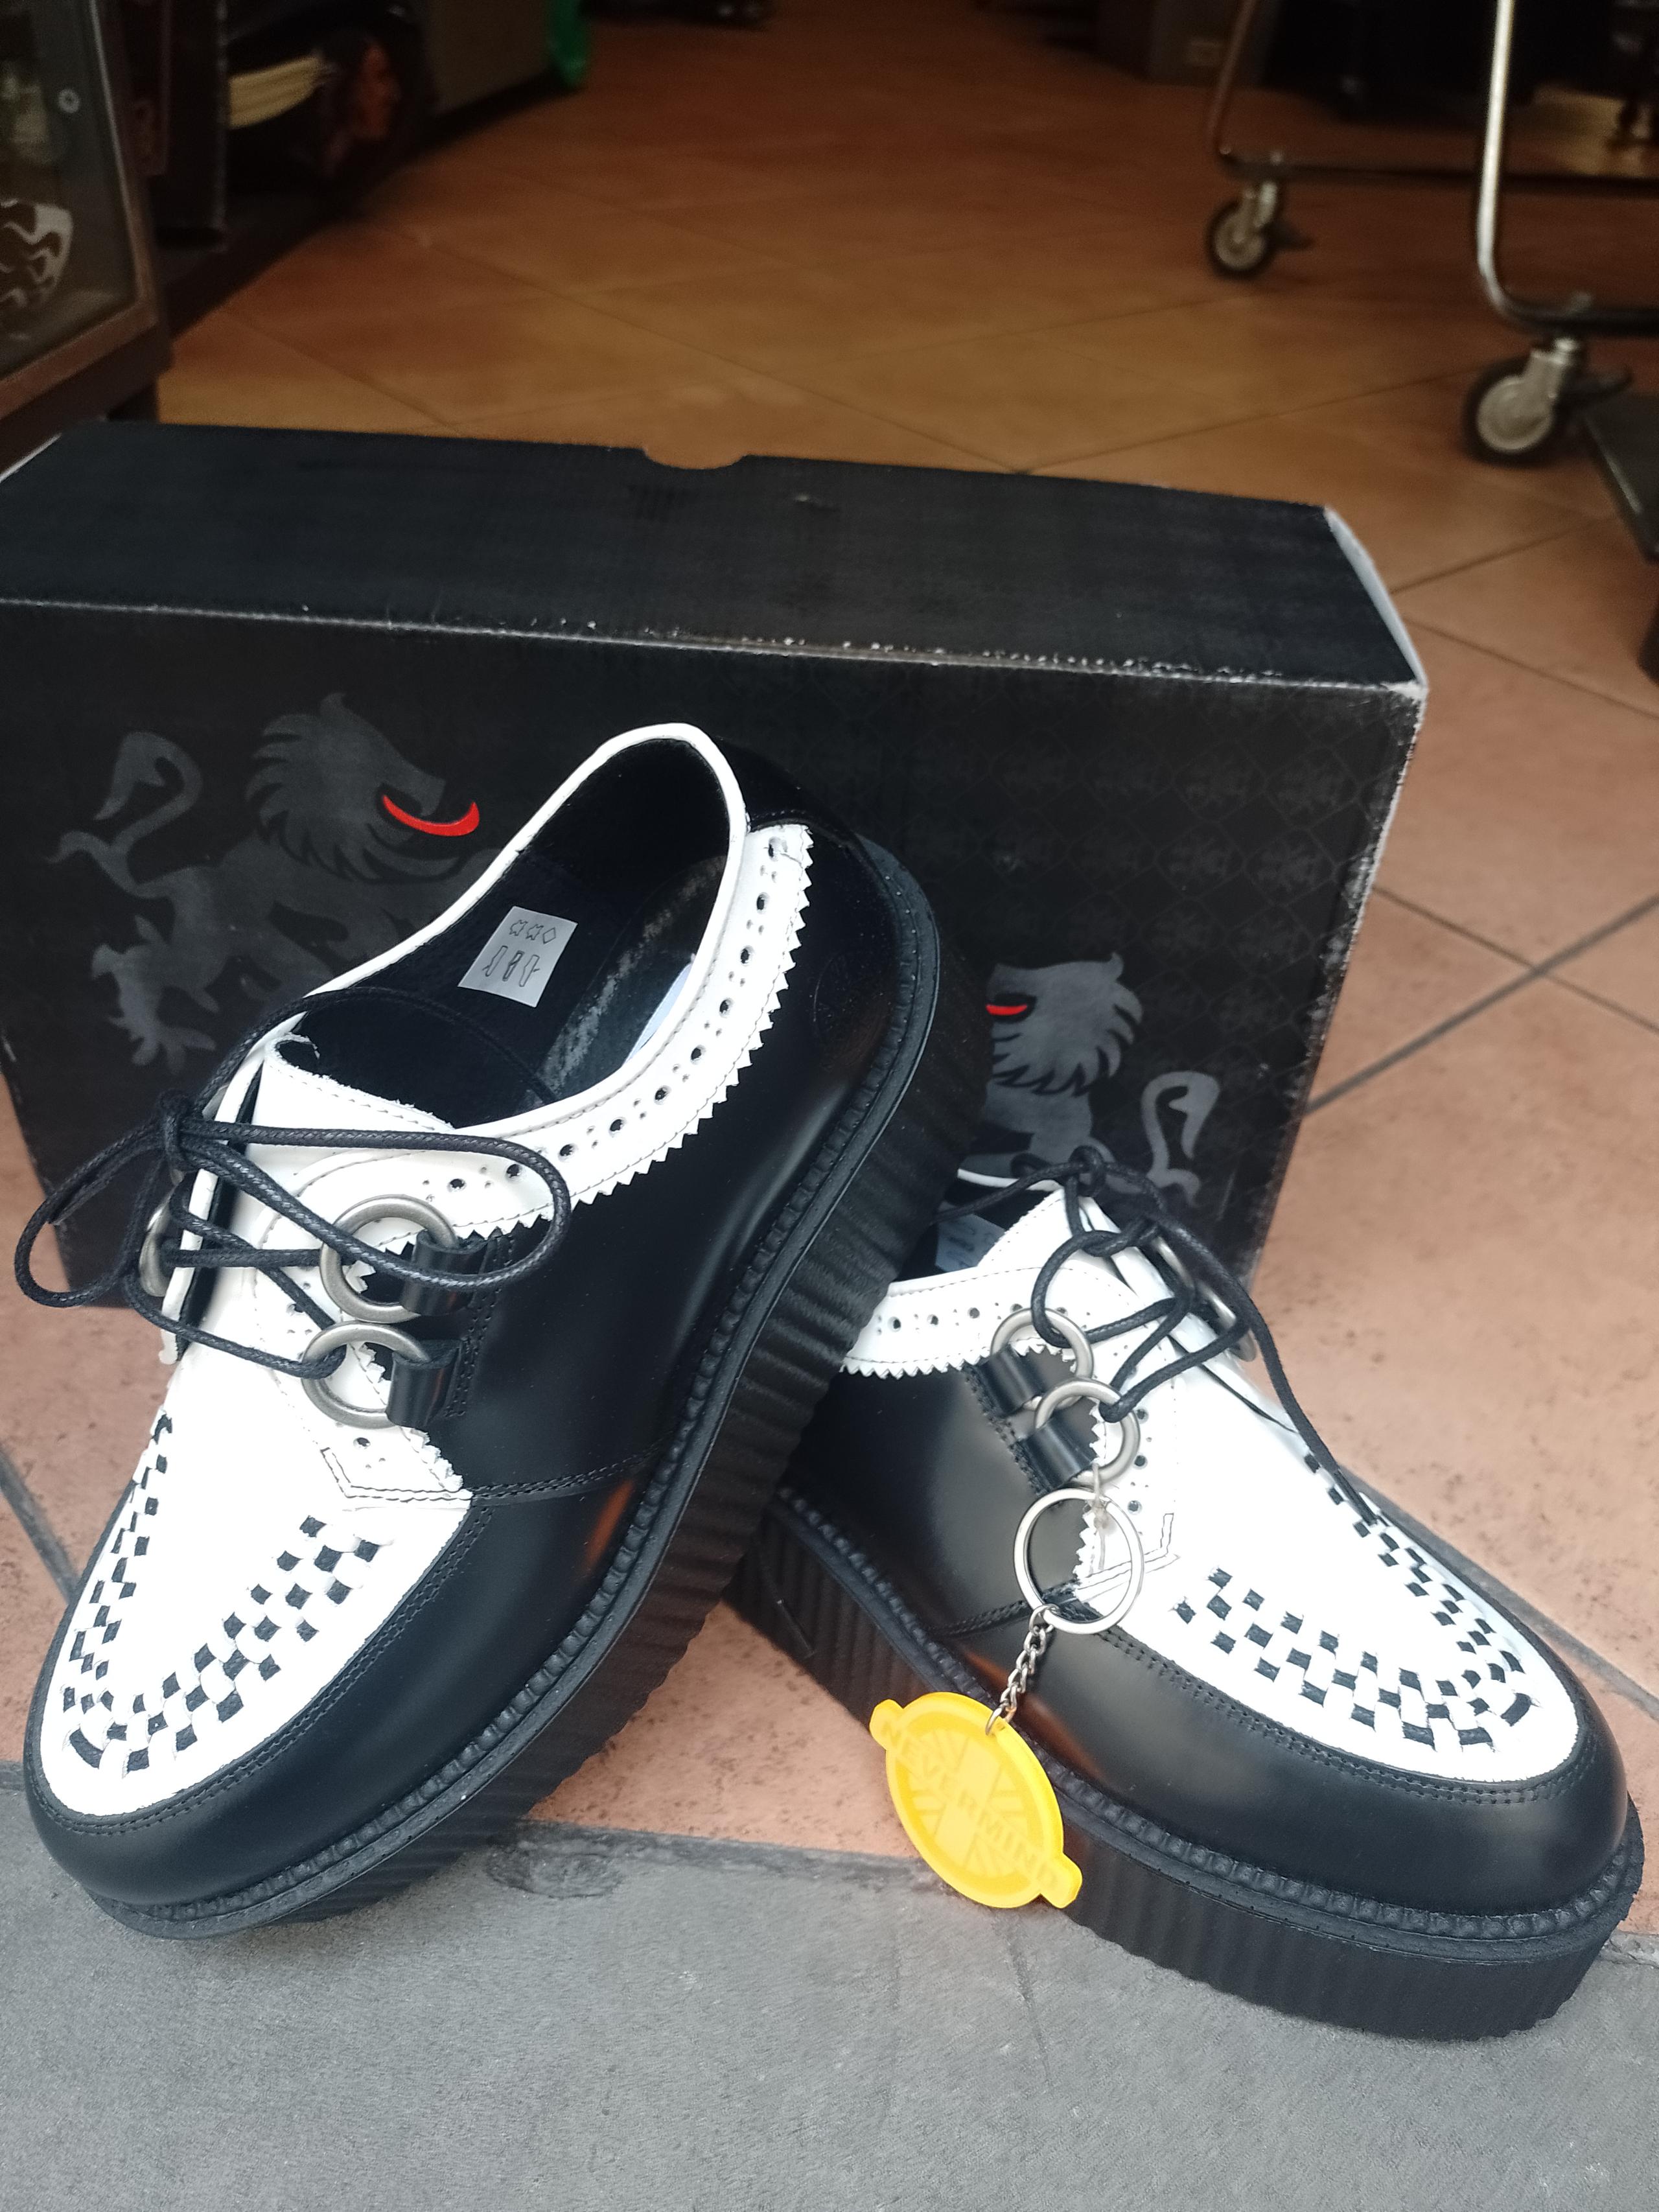 Creepers scarpe punta tonda vera pelle bicolore nero/bianco suola alta